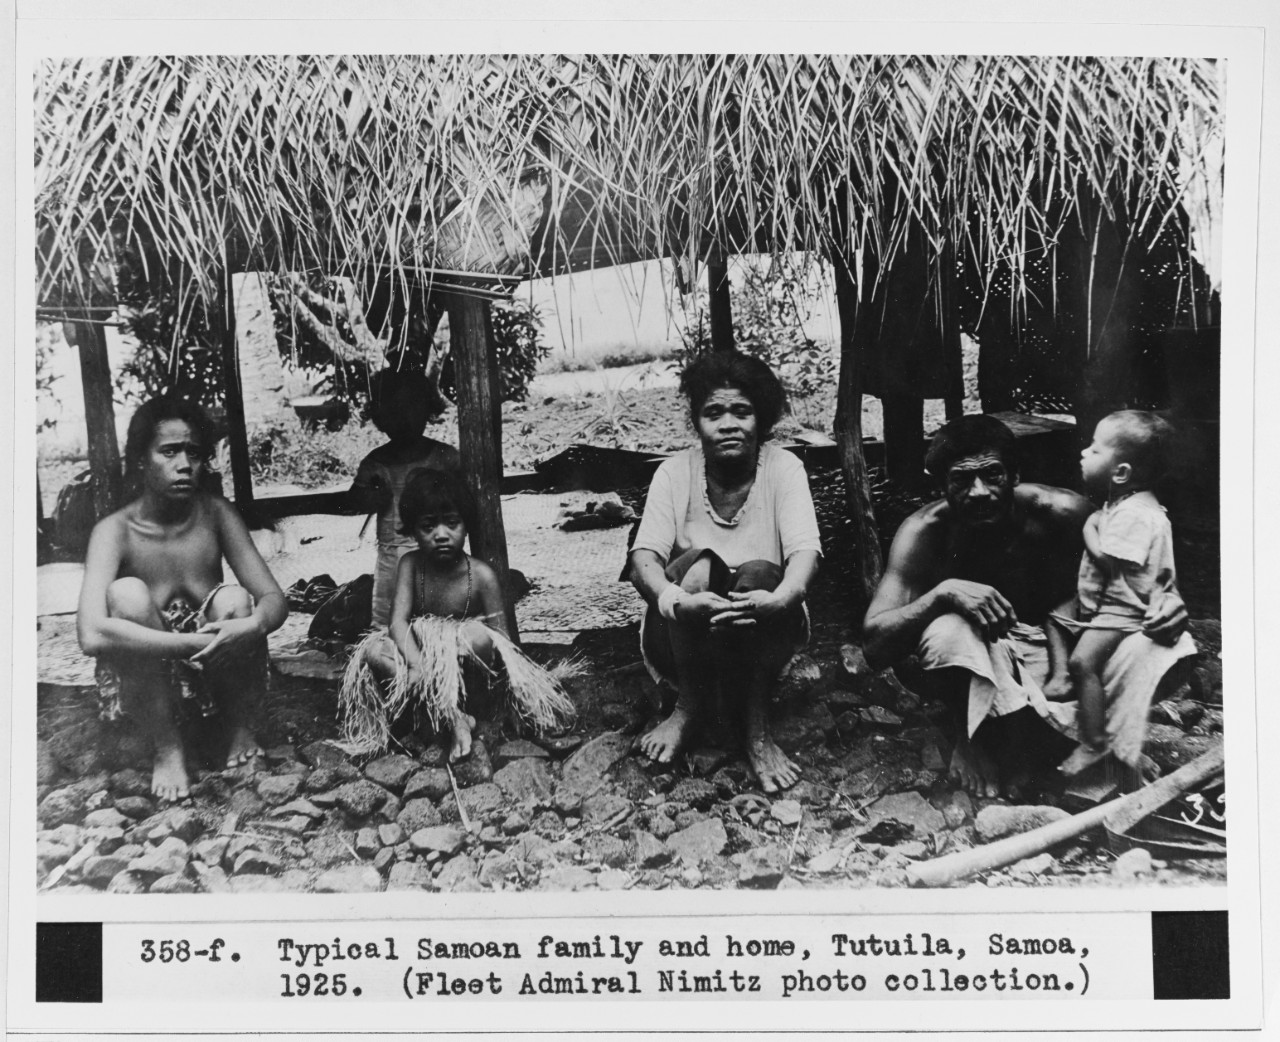 A typical native house and family at Tutulia, Samoa, 1925.